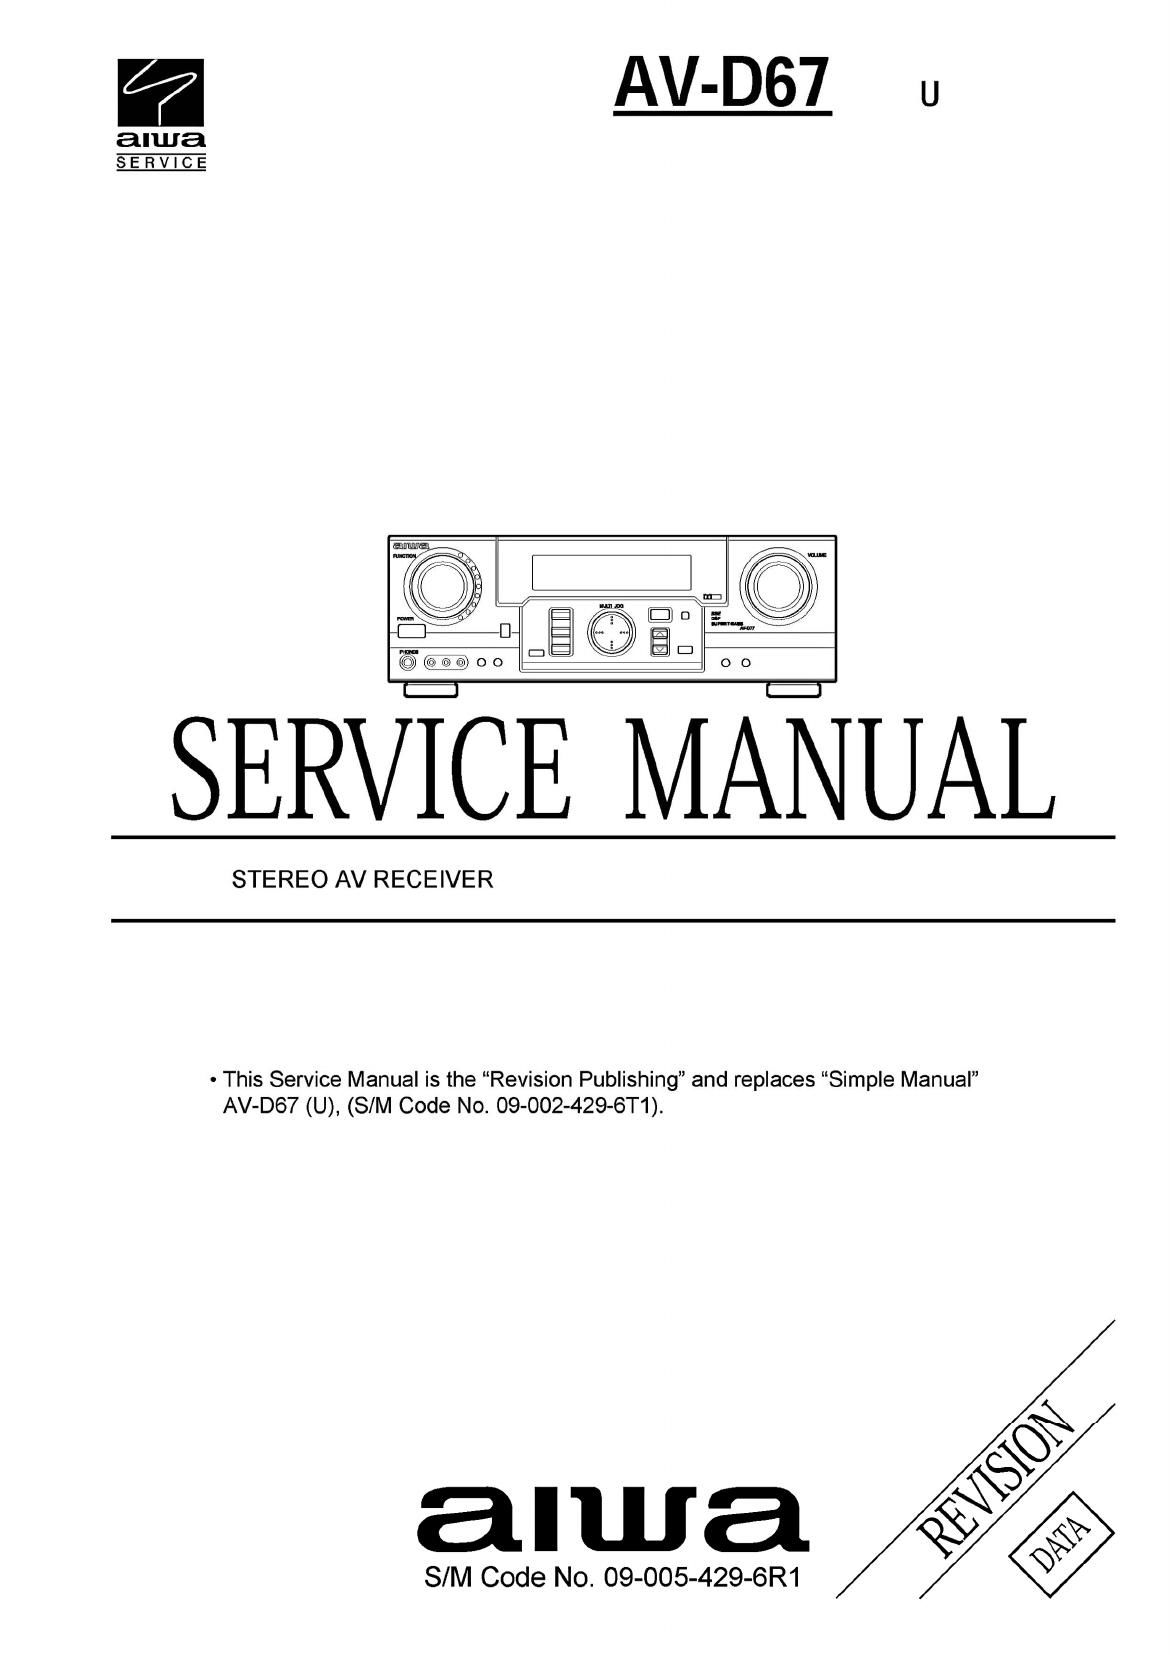 Aiwa AV D67 Service Manual